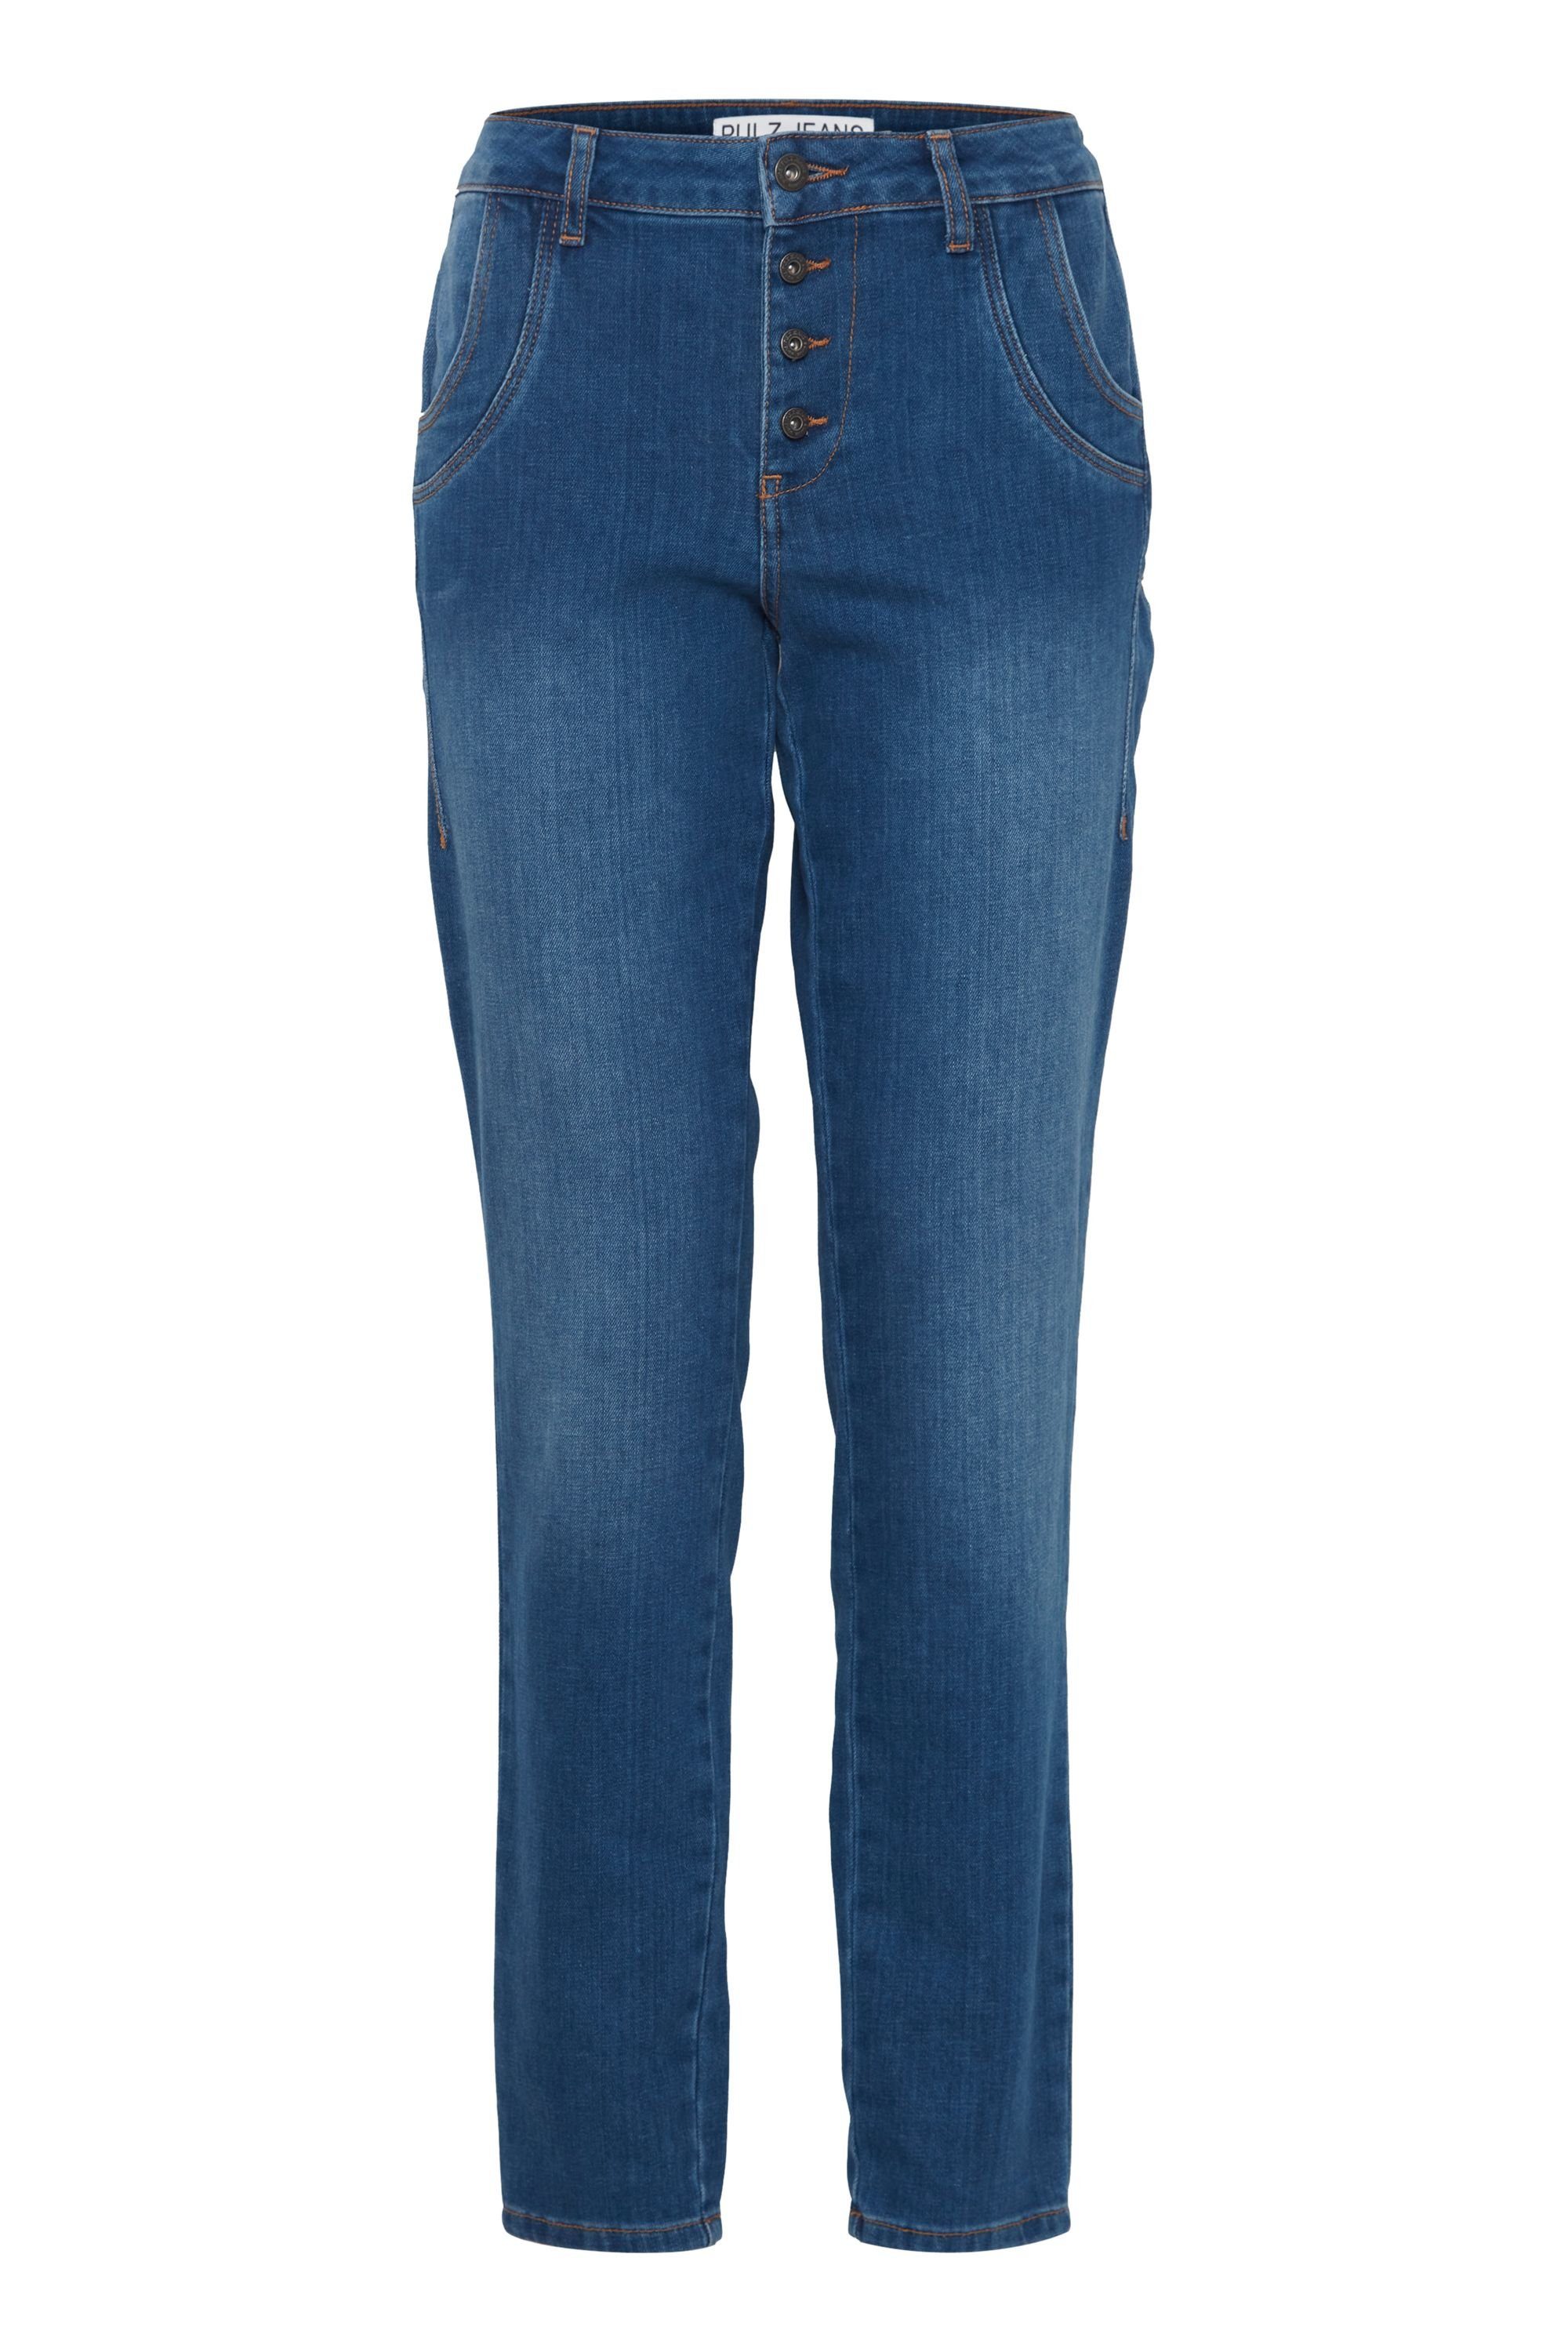 5-Pocket-Jeans Leg Pulz denim Skinny blue Jeans Loose (200005) Medium PZMELINA Jeans